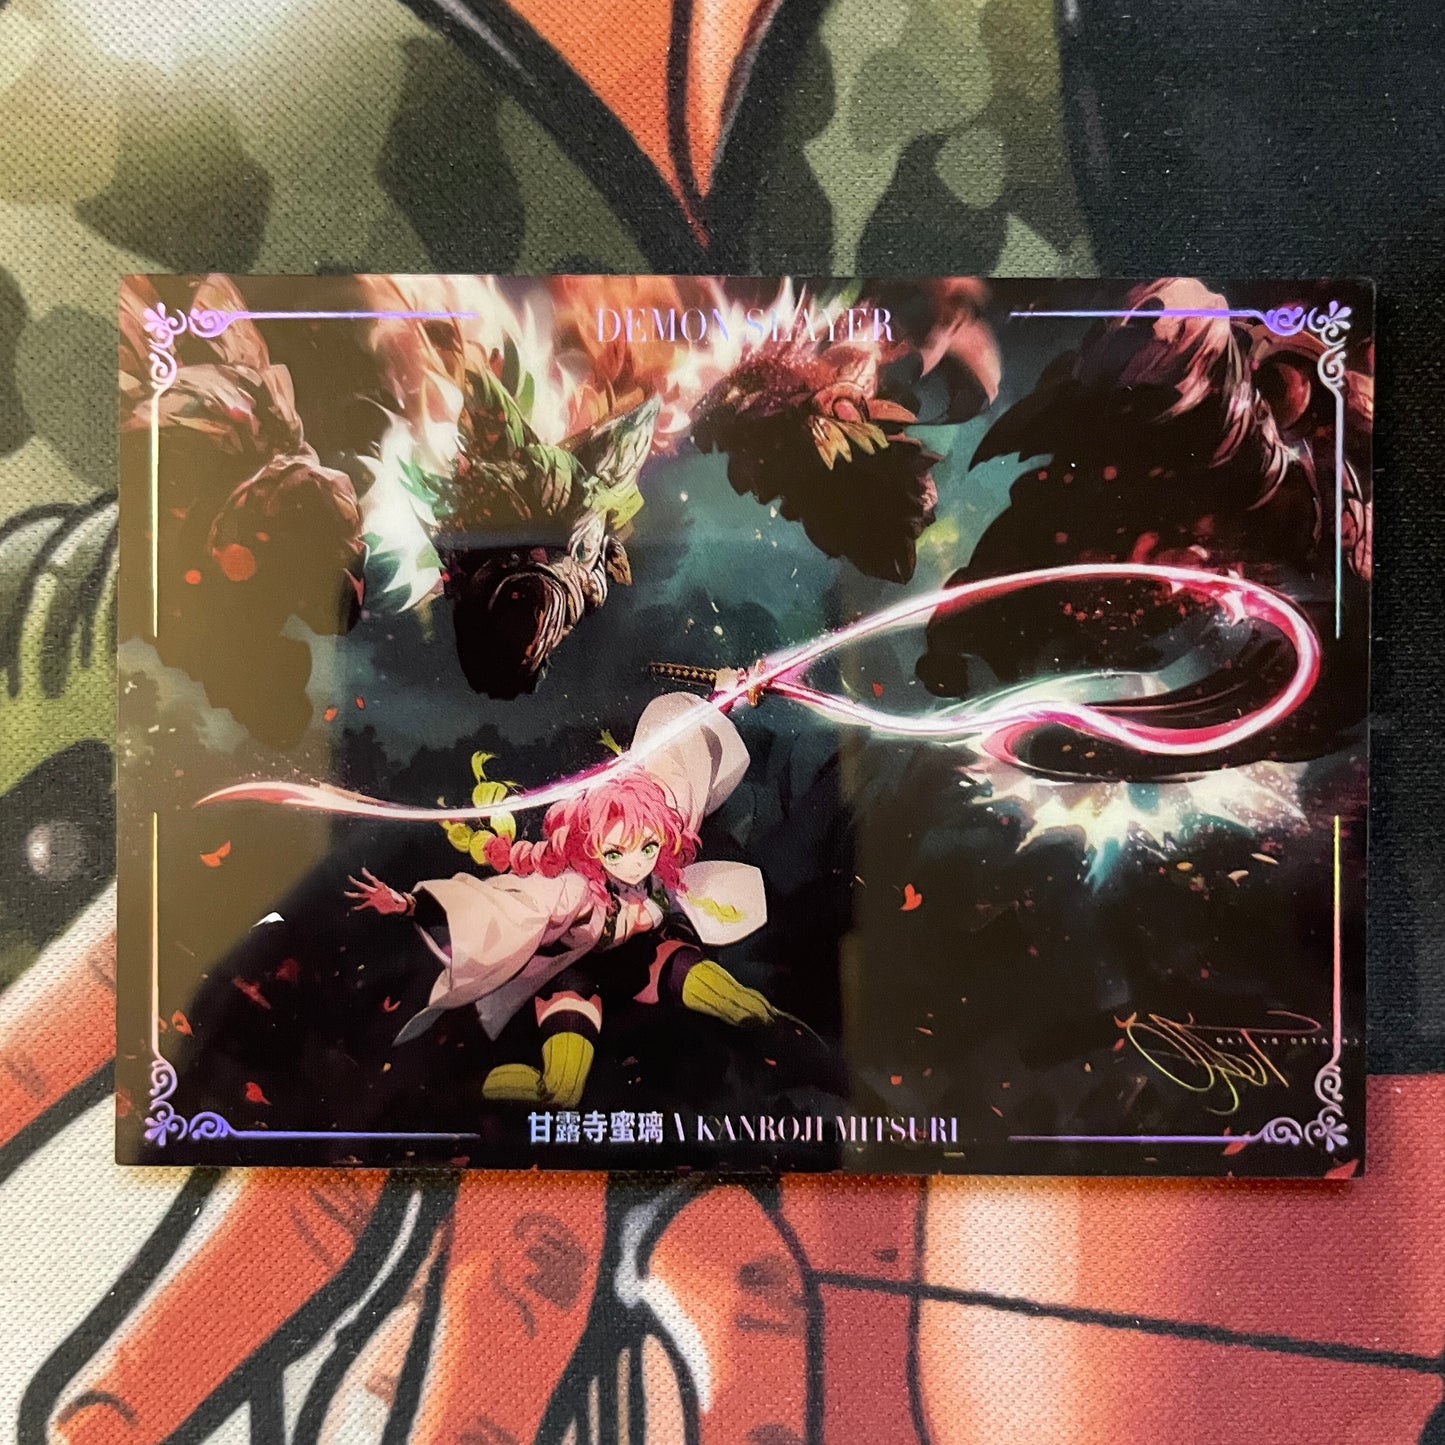 Demon Slayer - Yami Card Singles